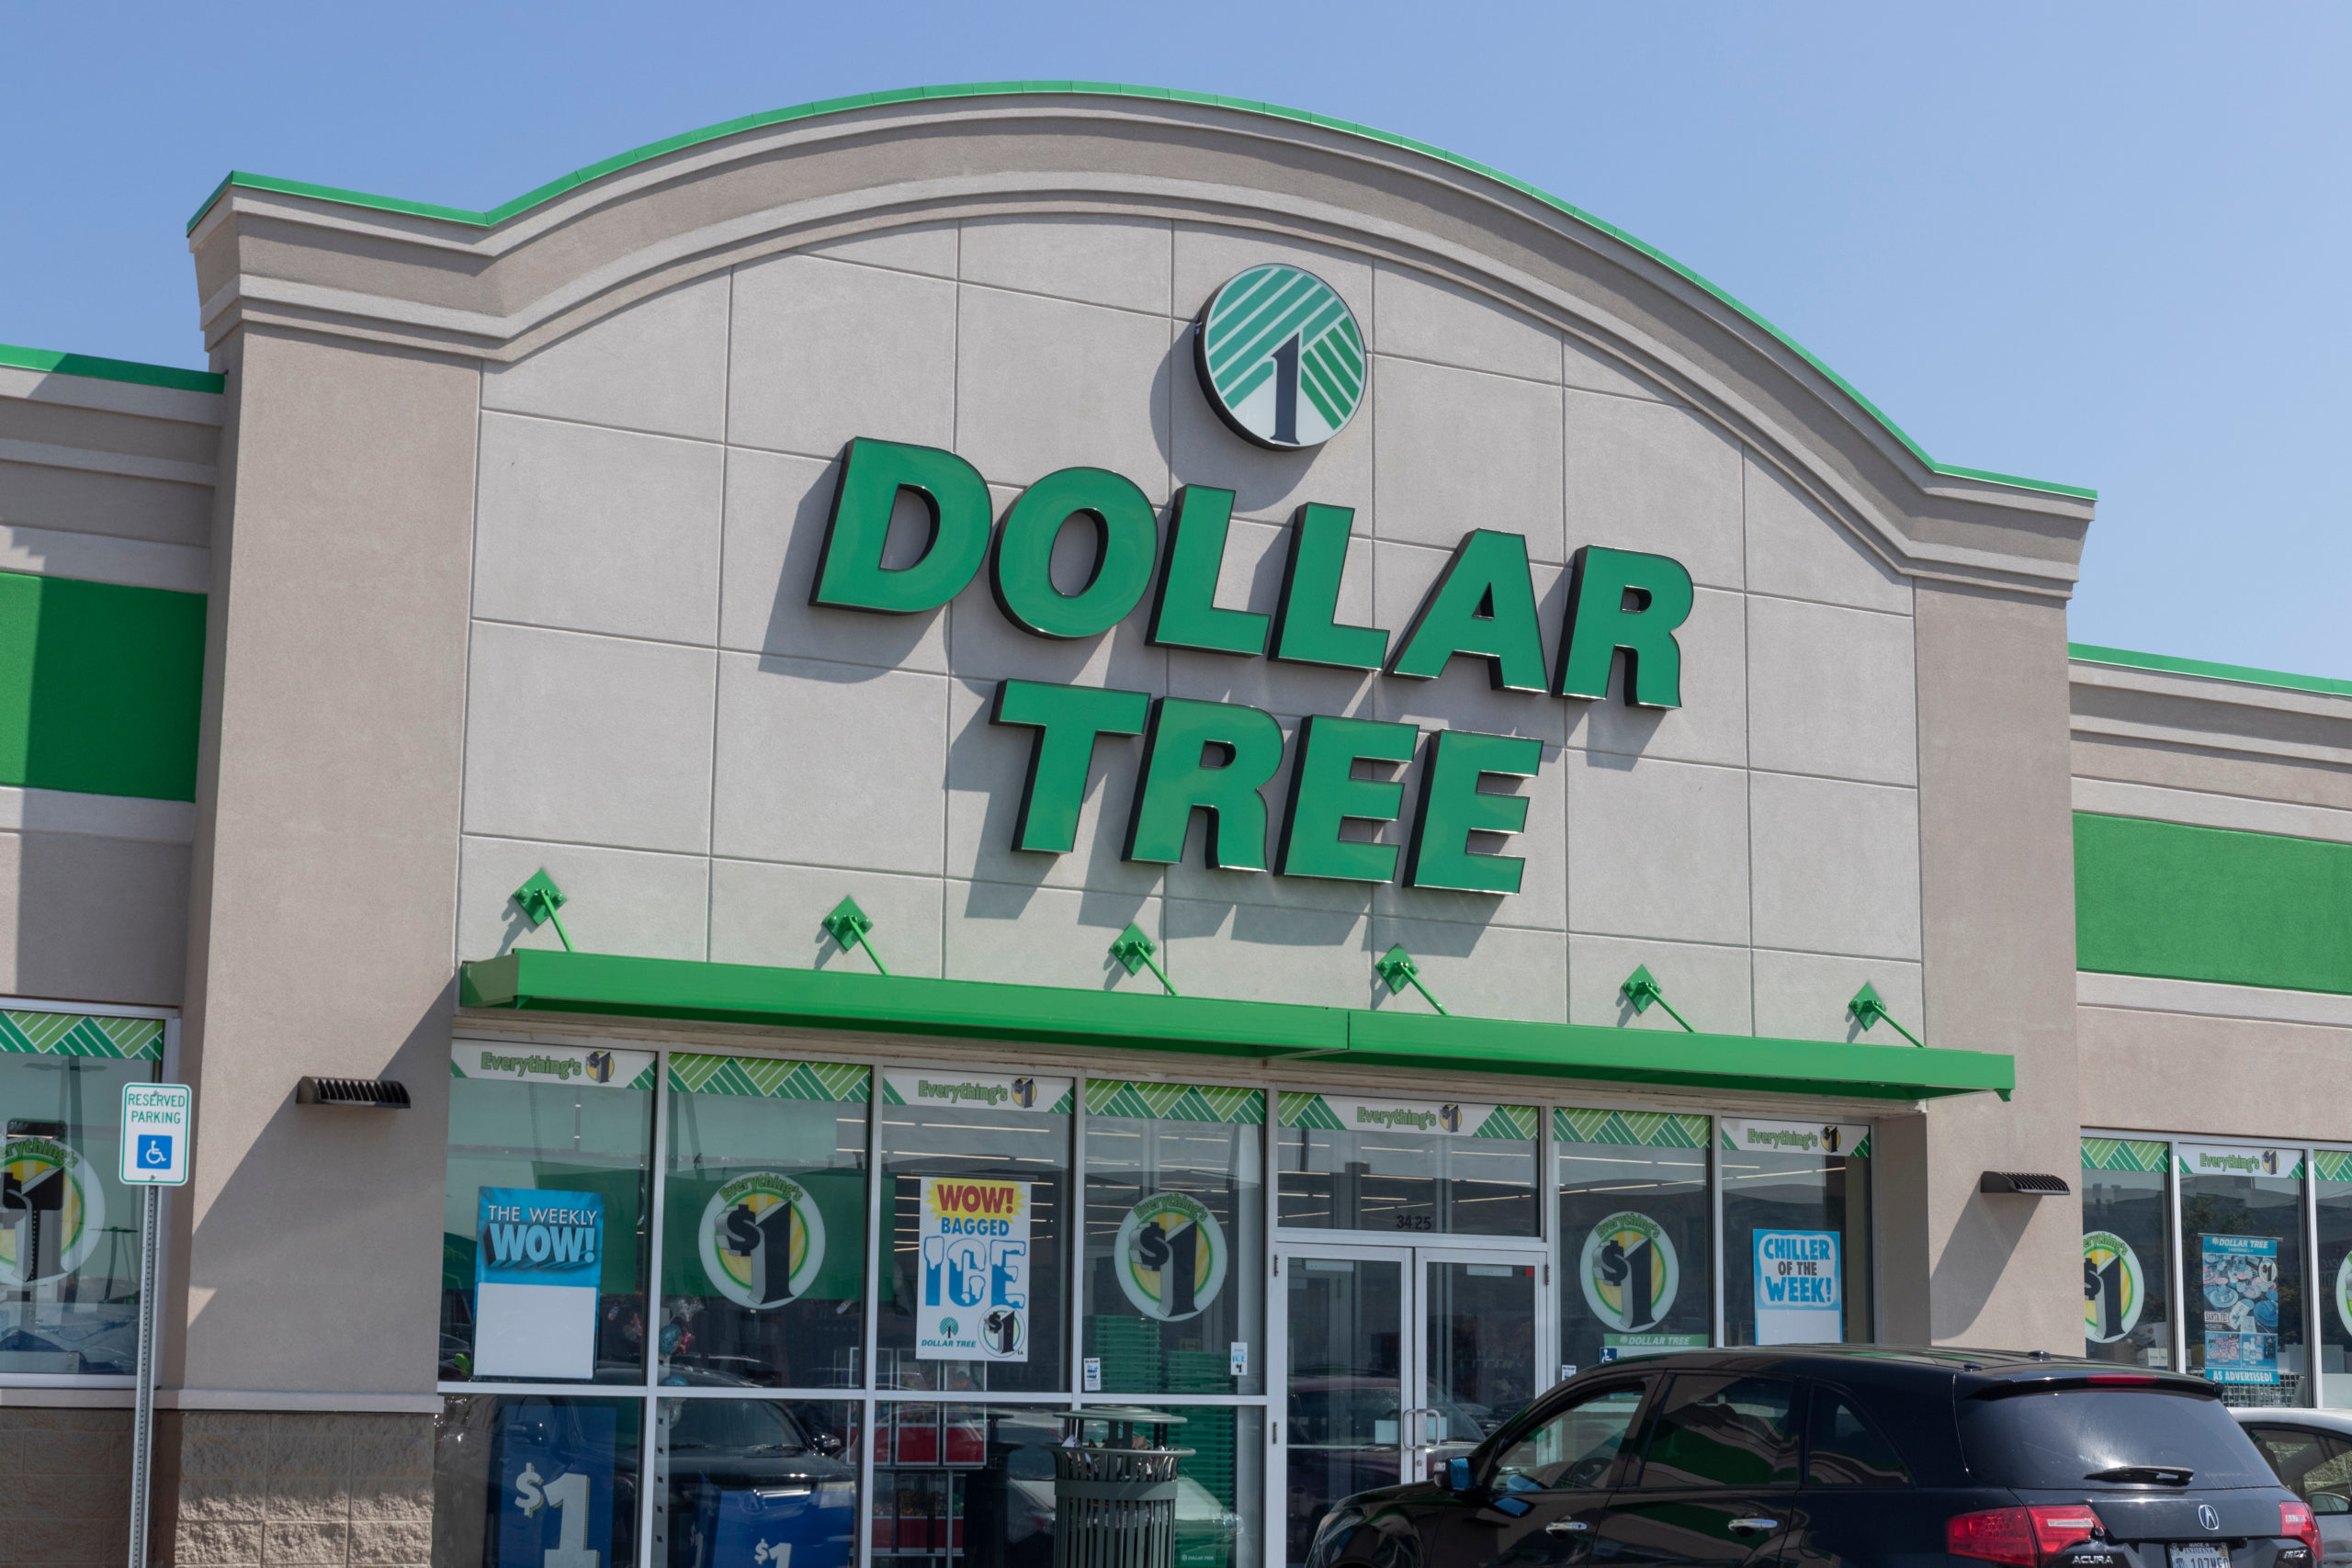 Family Dollar, Dollar Tree to Close 1000 Stores